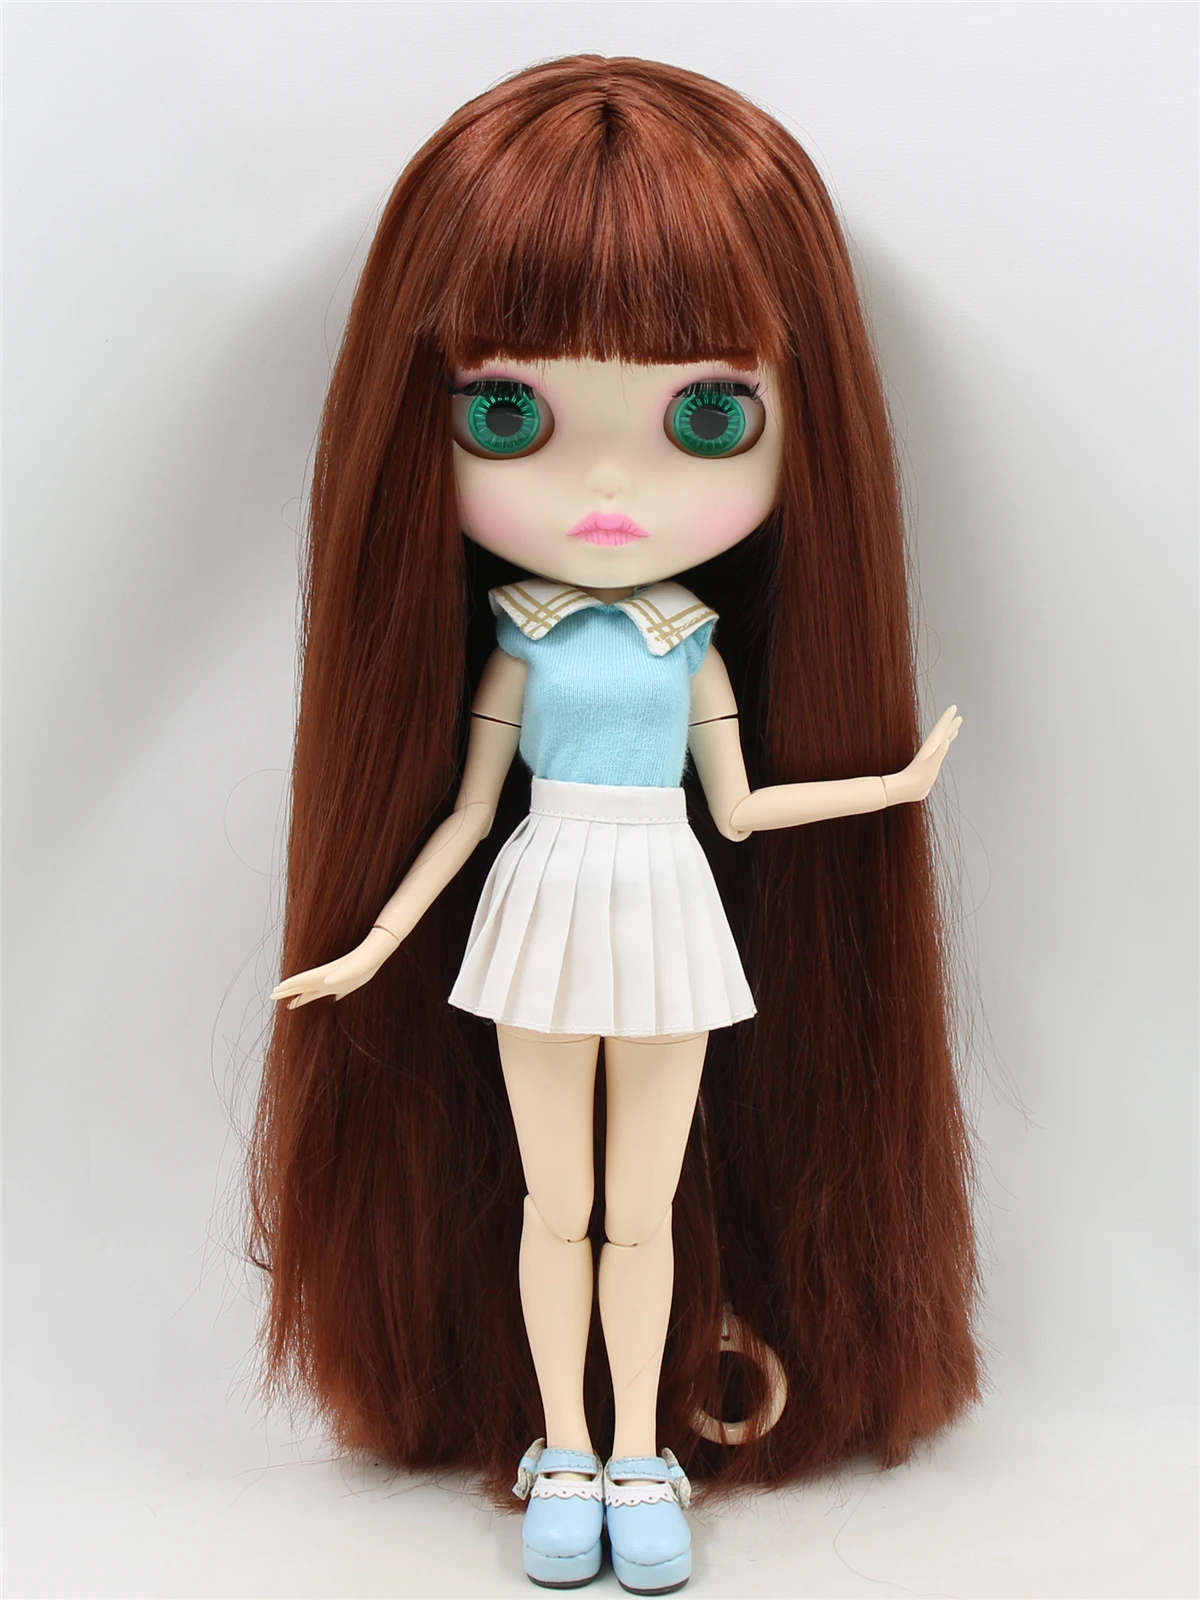 Takara 12" Neo Blythe Doll from Factory Nude Doll Dark long wine red hair